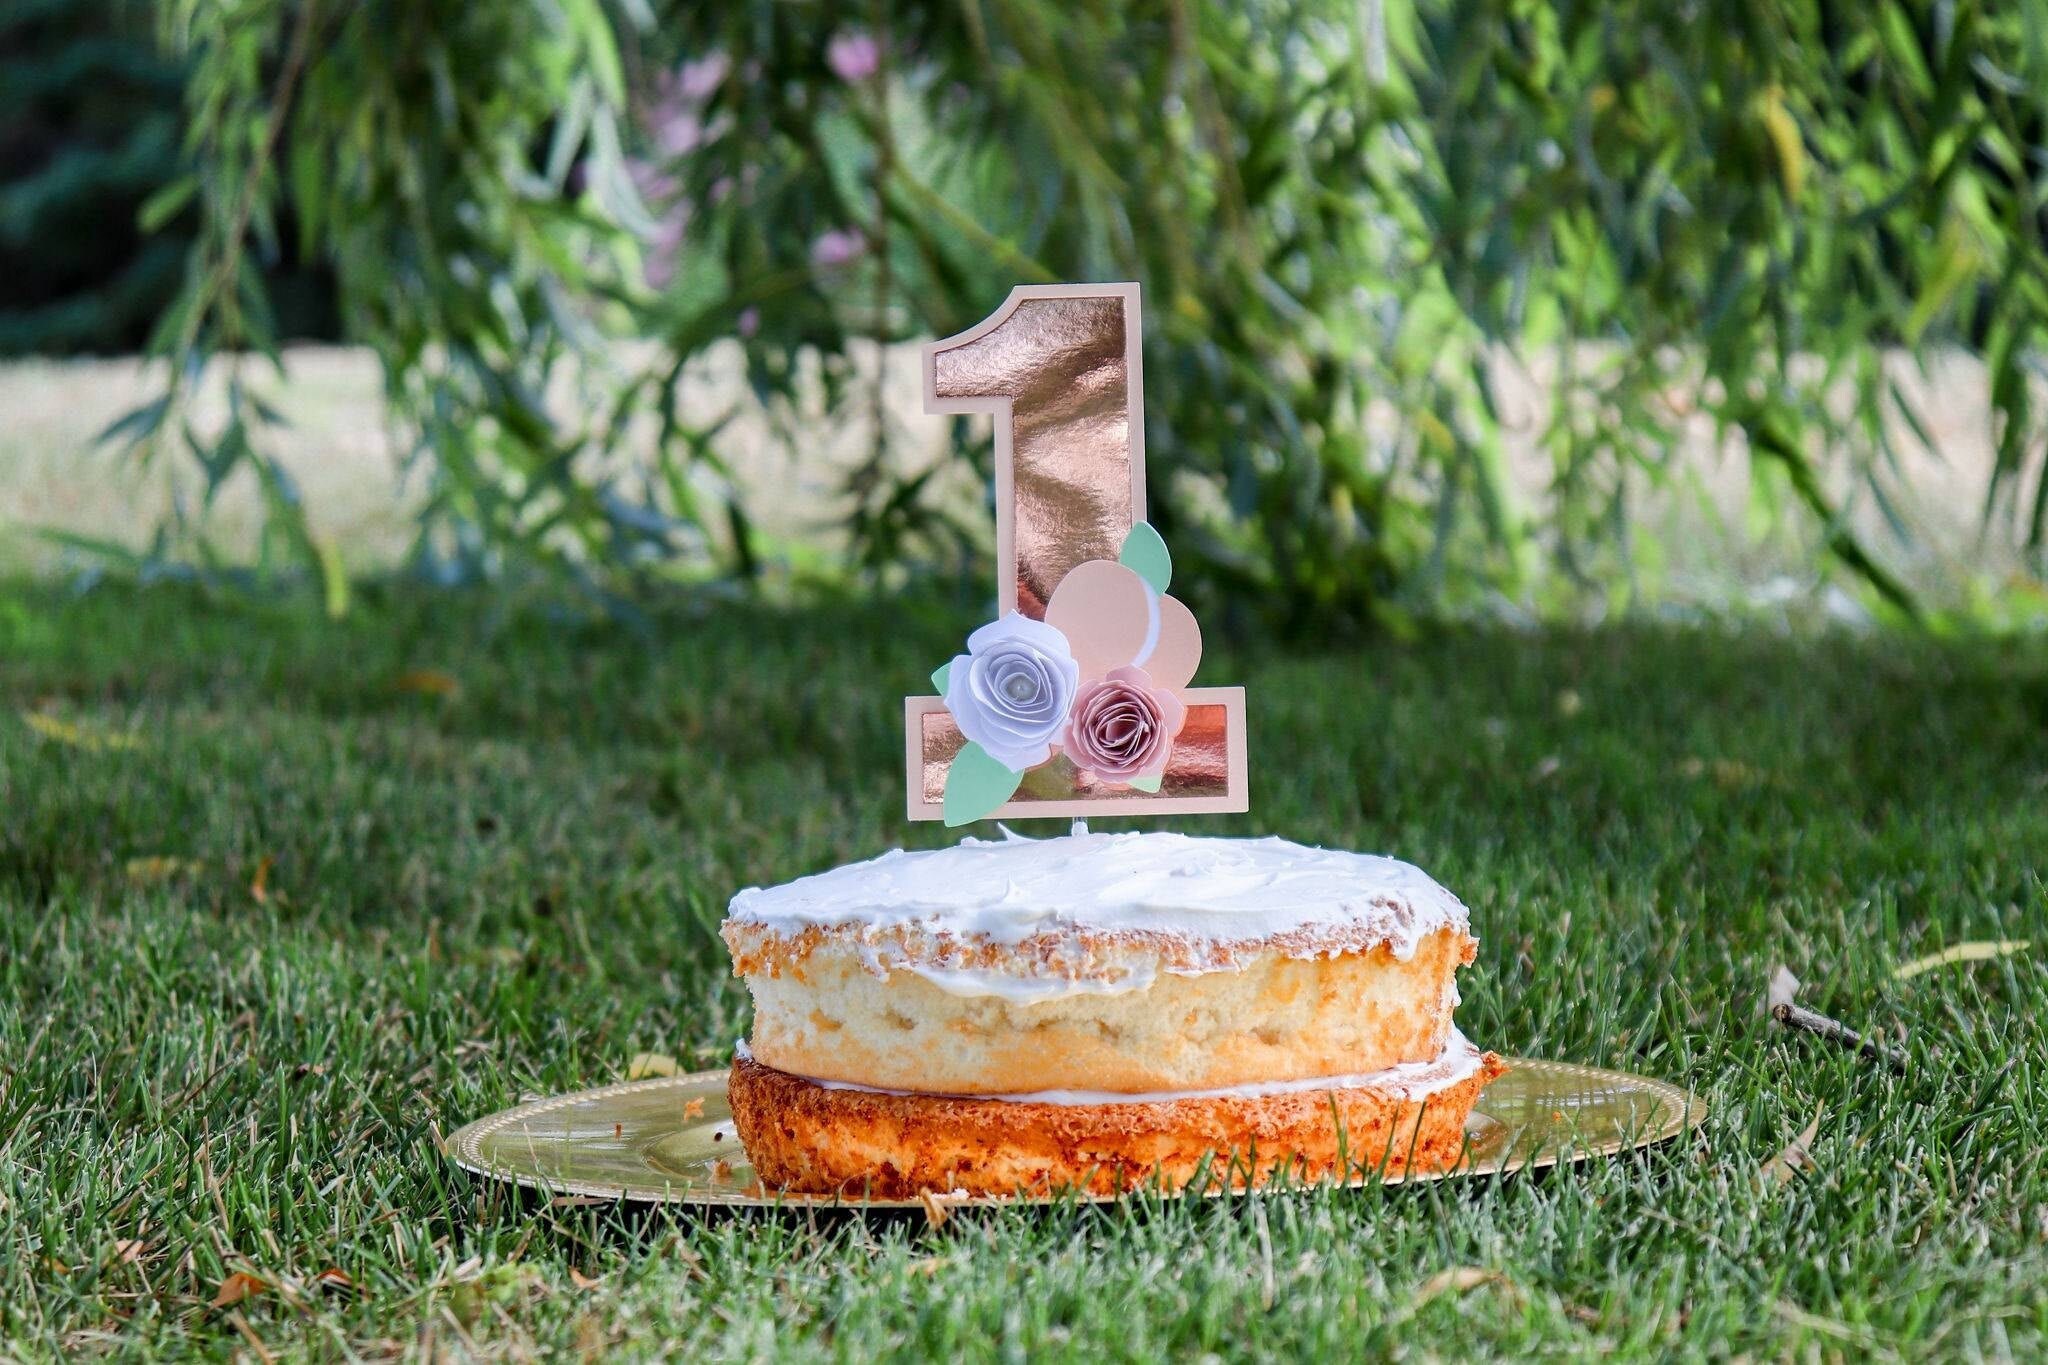 HAPPY BIRTHDAY CAKE TOPPER - PEACHY PINK – Bonjour Fête